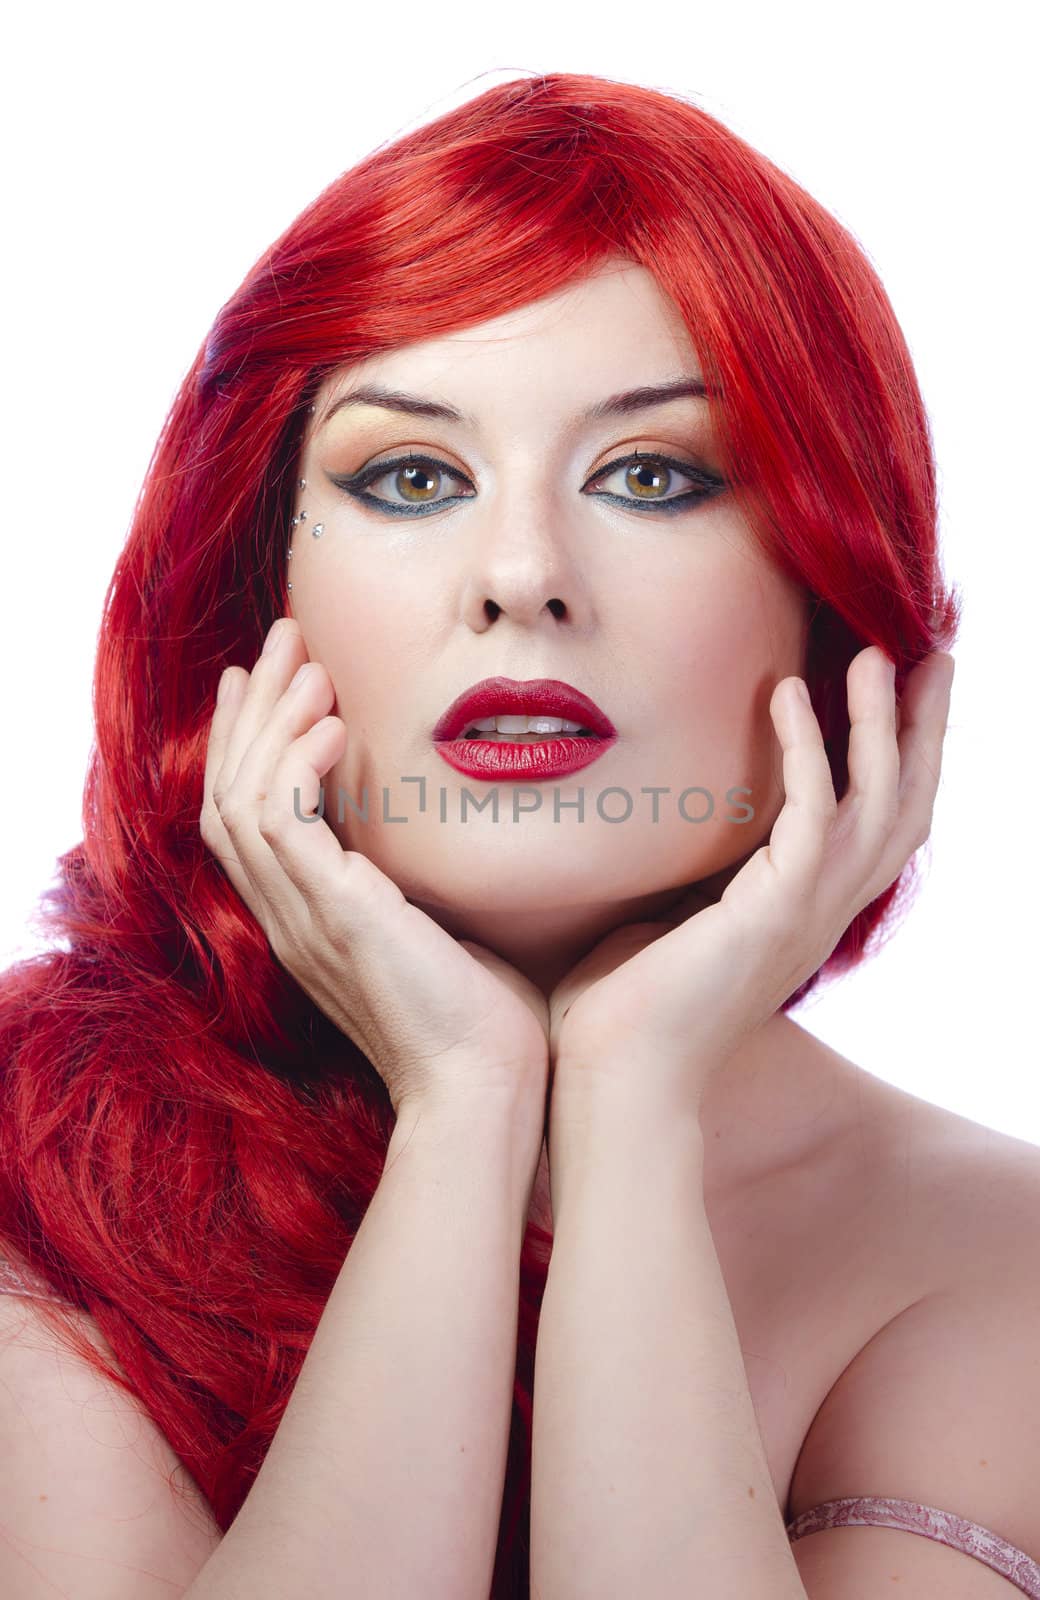 Portrait of beautiful woman, she has red lipstick